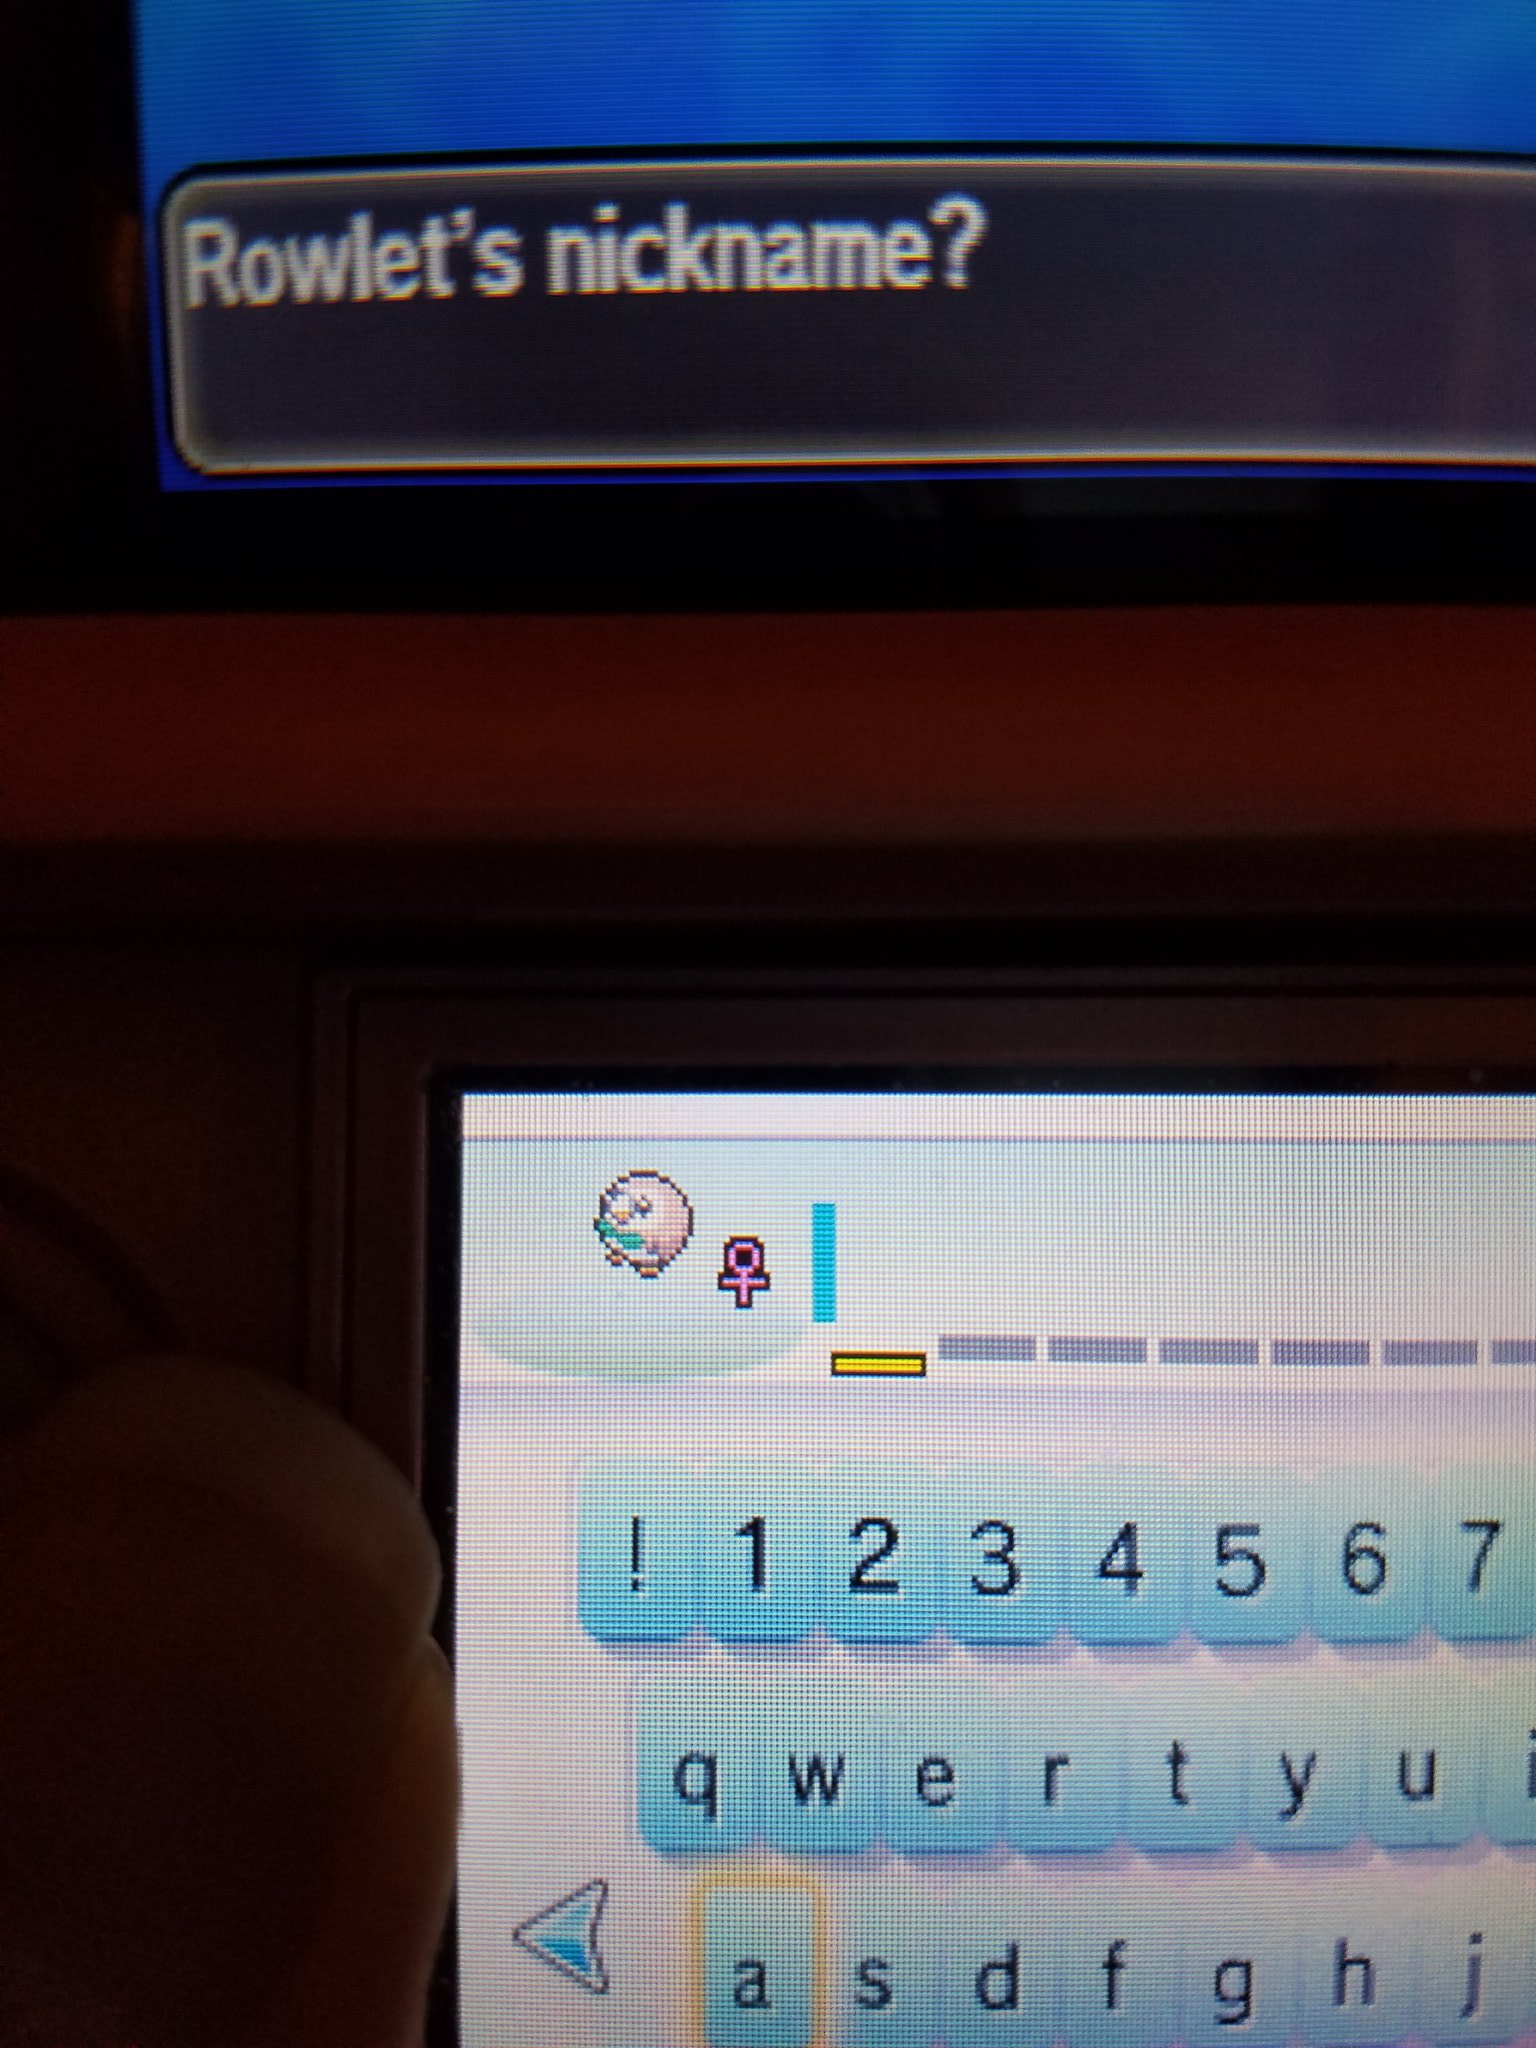 Pokemon Ultra Sun: Naming
Rowlet